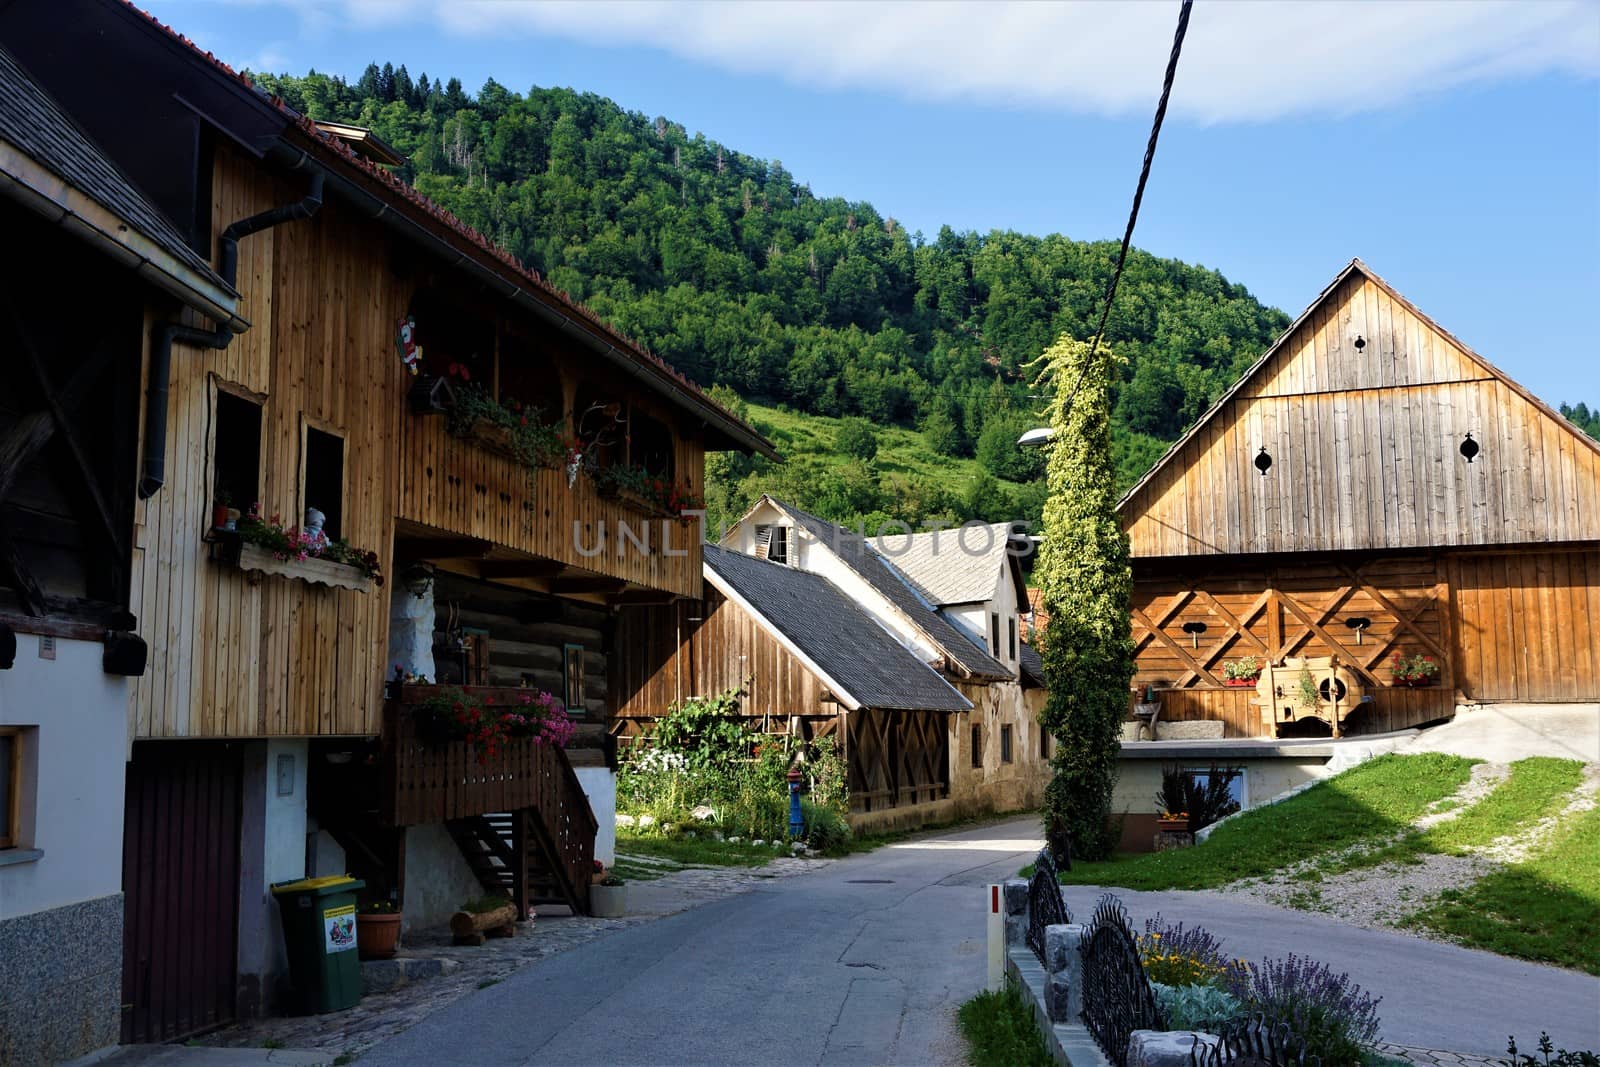 A few wooden houses in Zasip near Bled, Slovenia